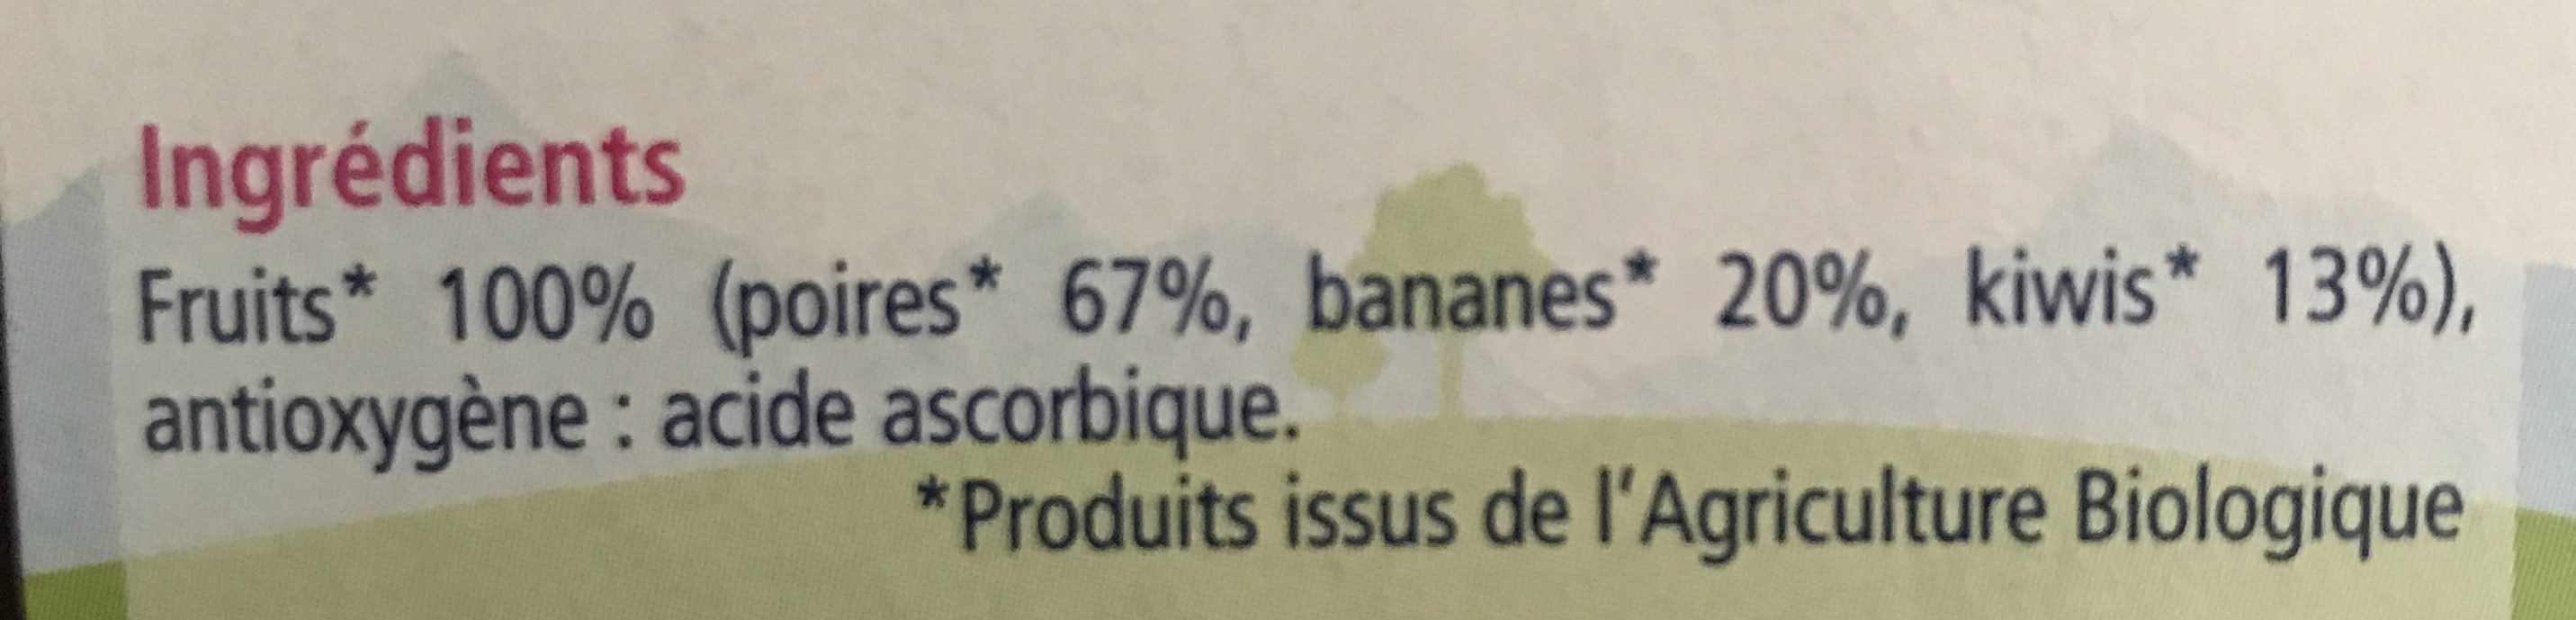 100% Fruits Poires Bananes Kiwis - Ingrédients